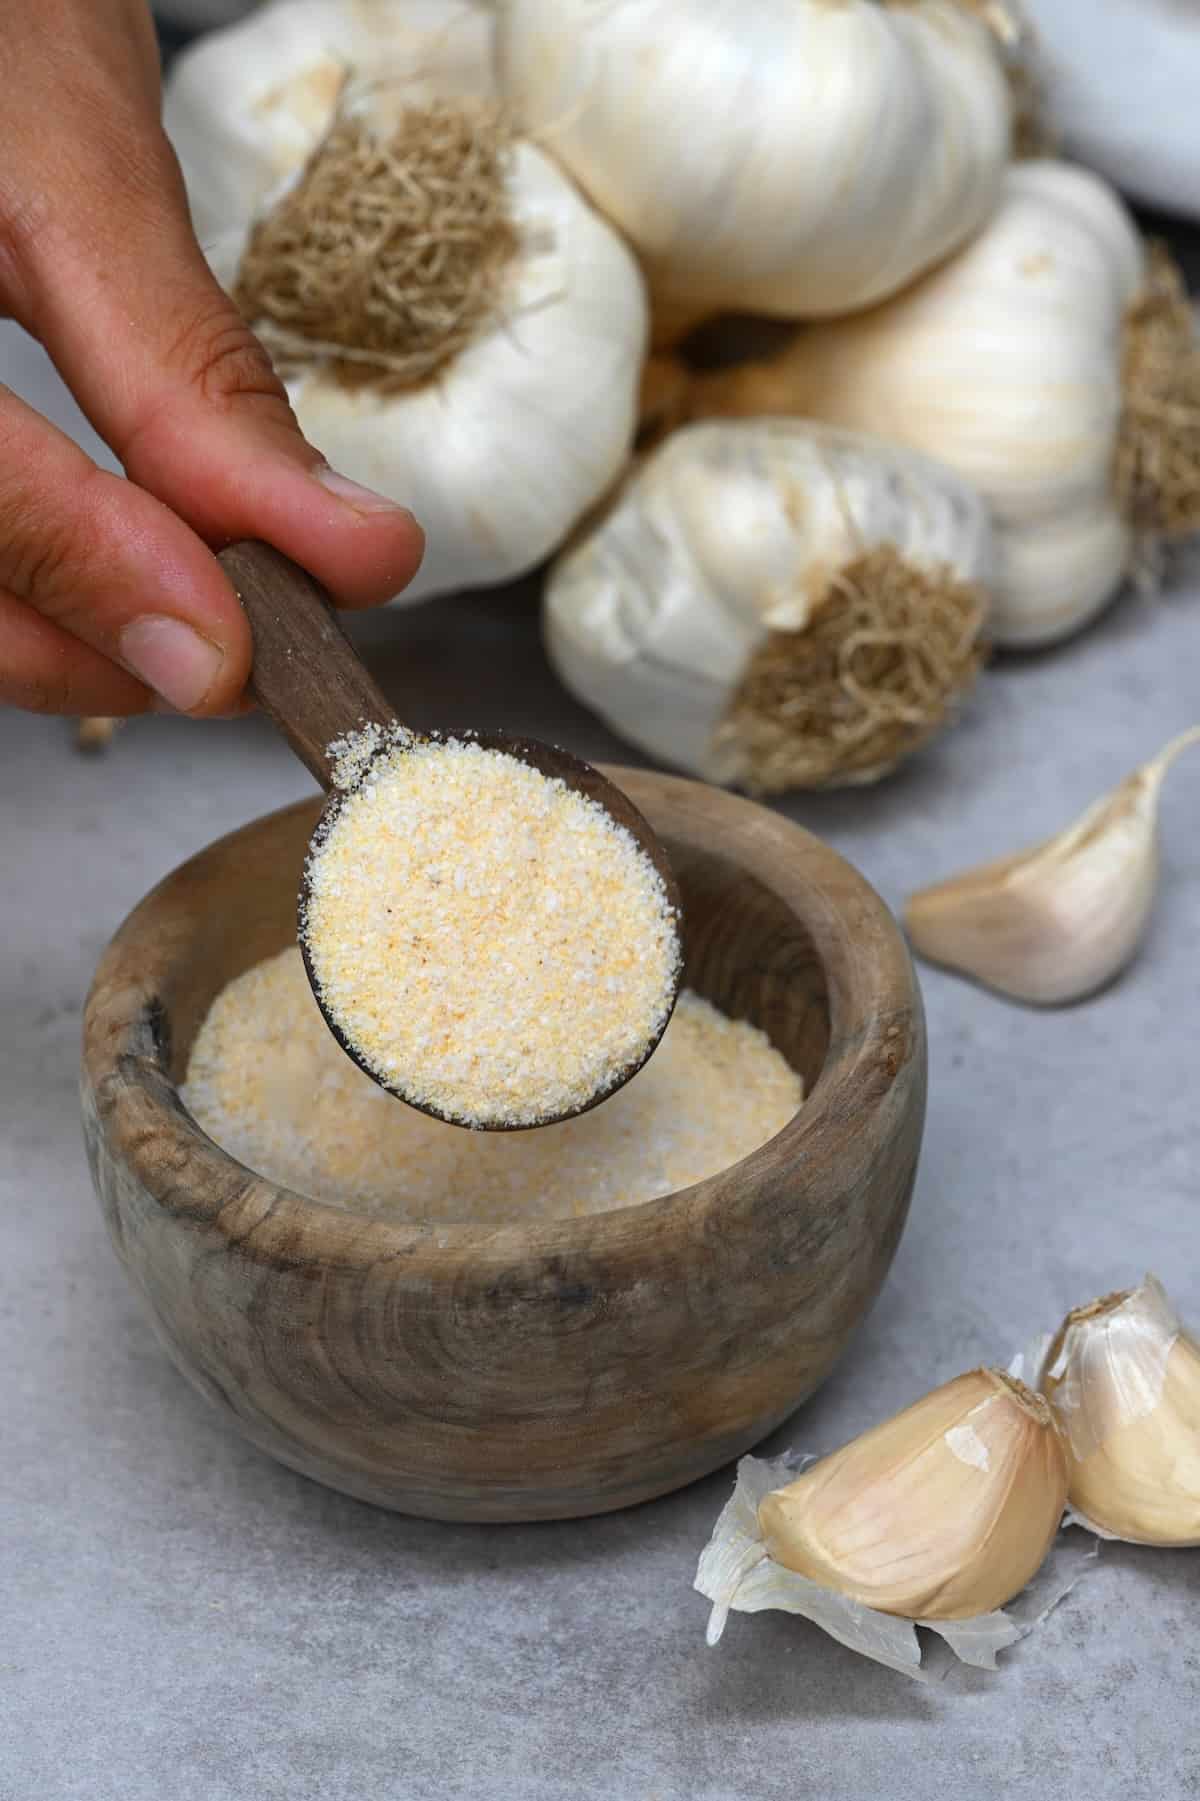 Mixing salt and garlic powder in a small bowl